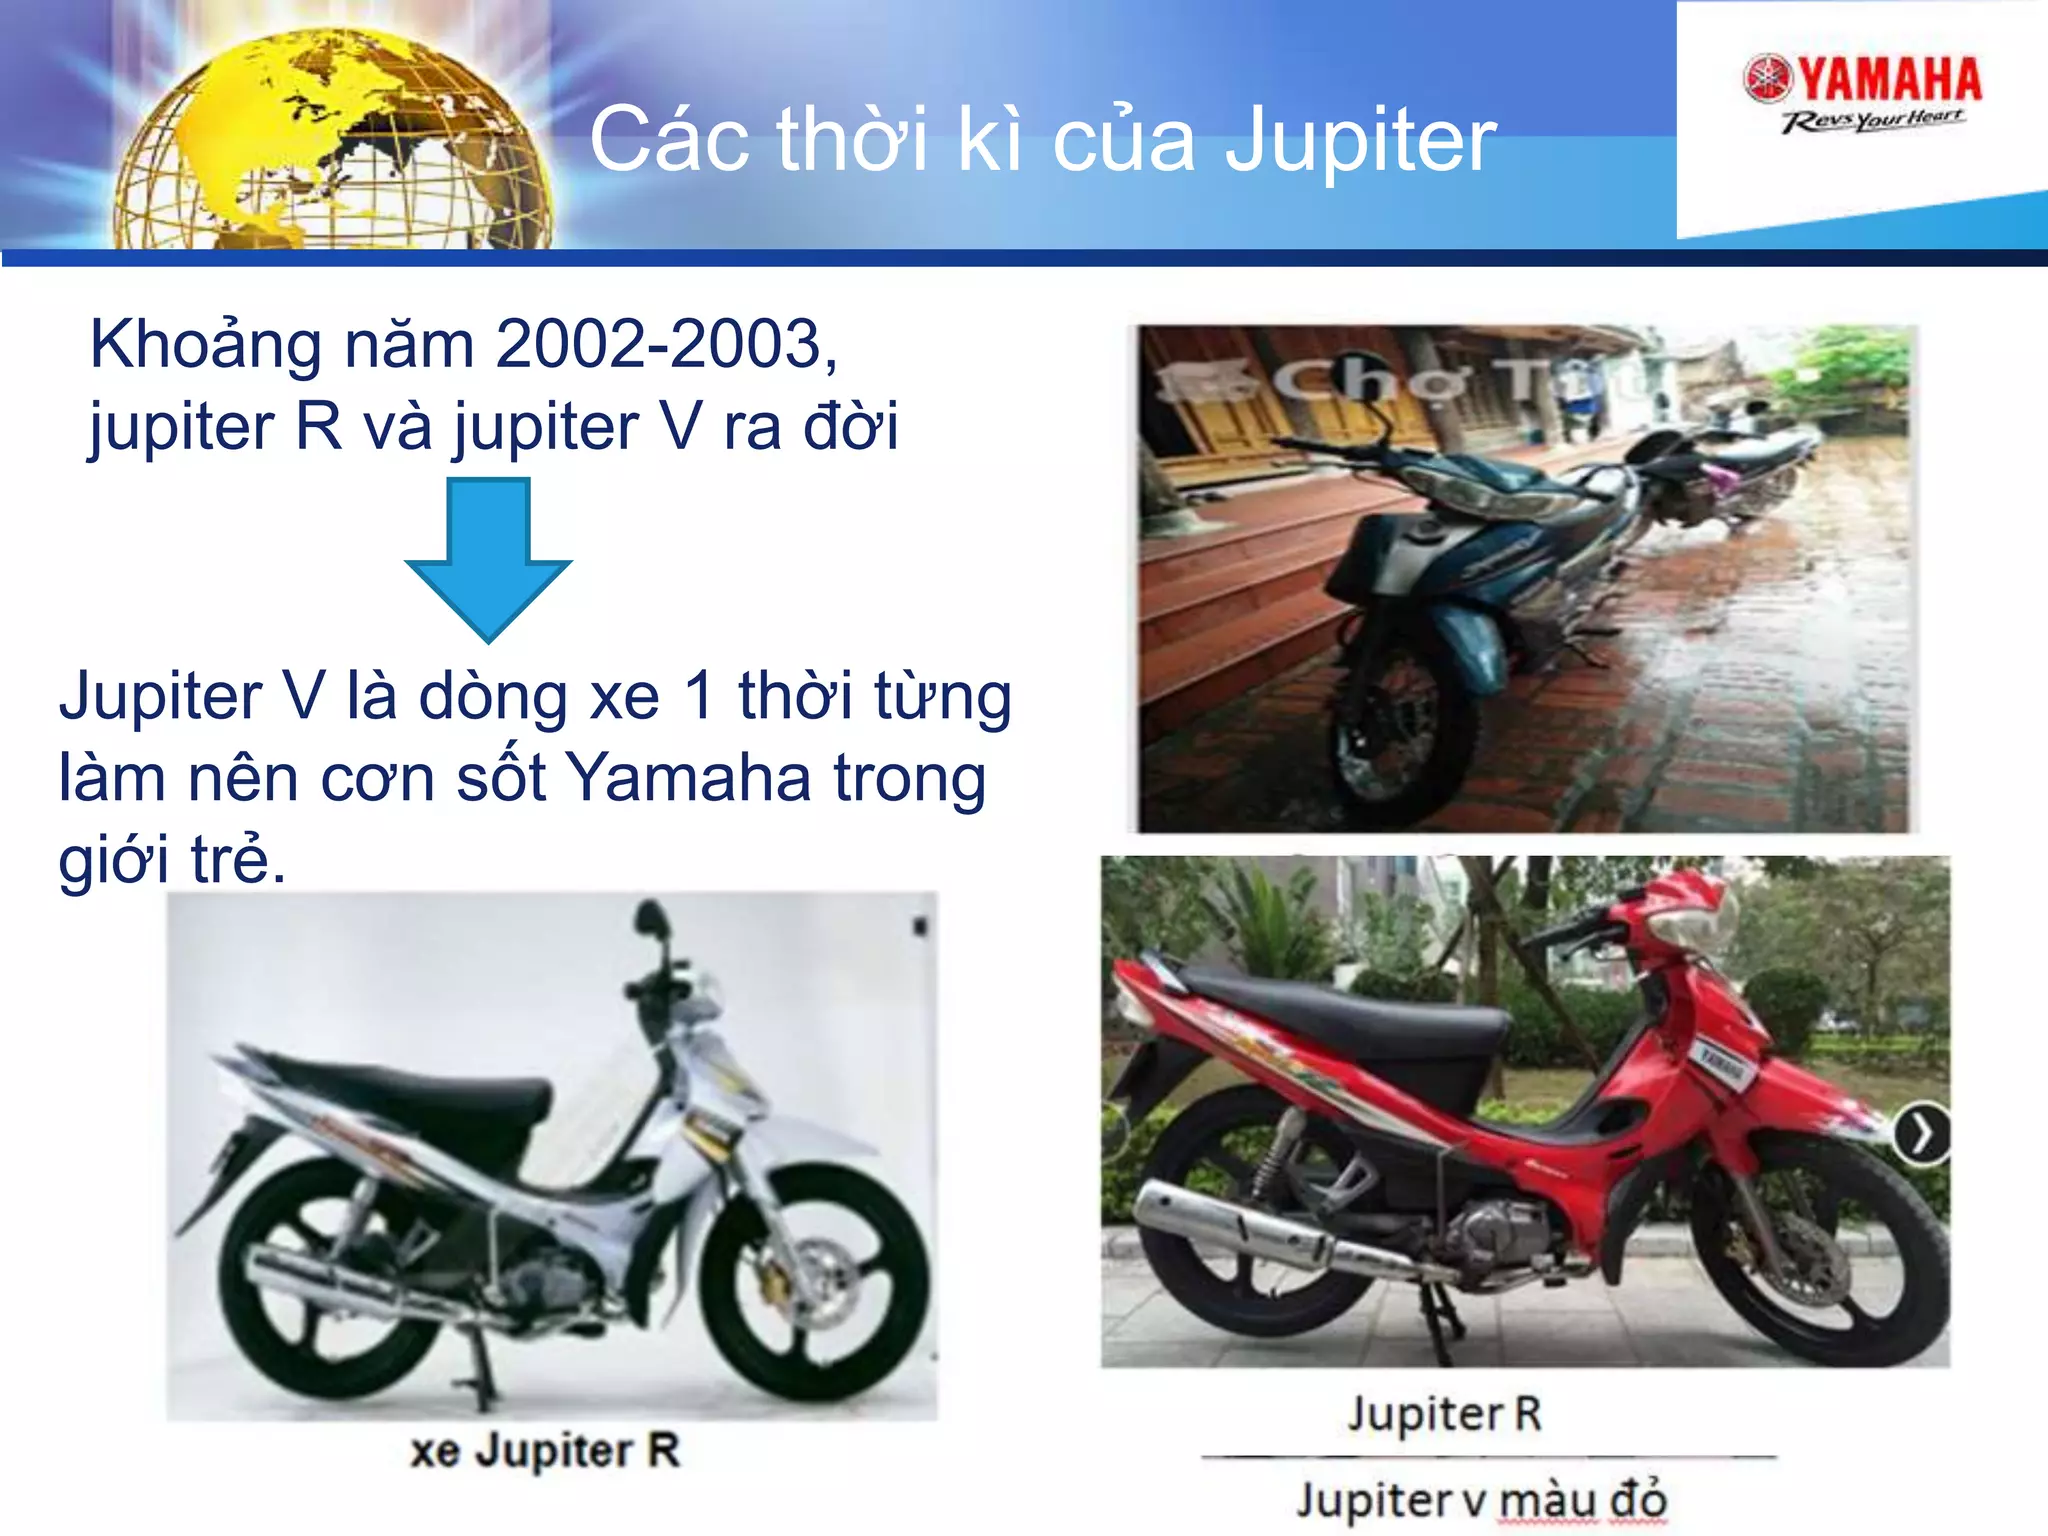 Jual Motor Yamaha Jupiter 2002 01 di DKI Jakarta Manual Silver Rp  4500000  3626047  Mobil123com